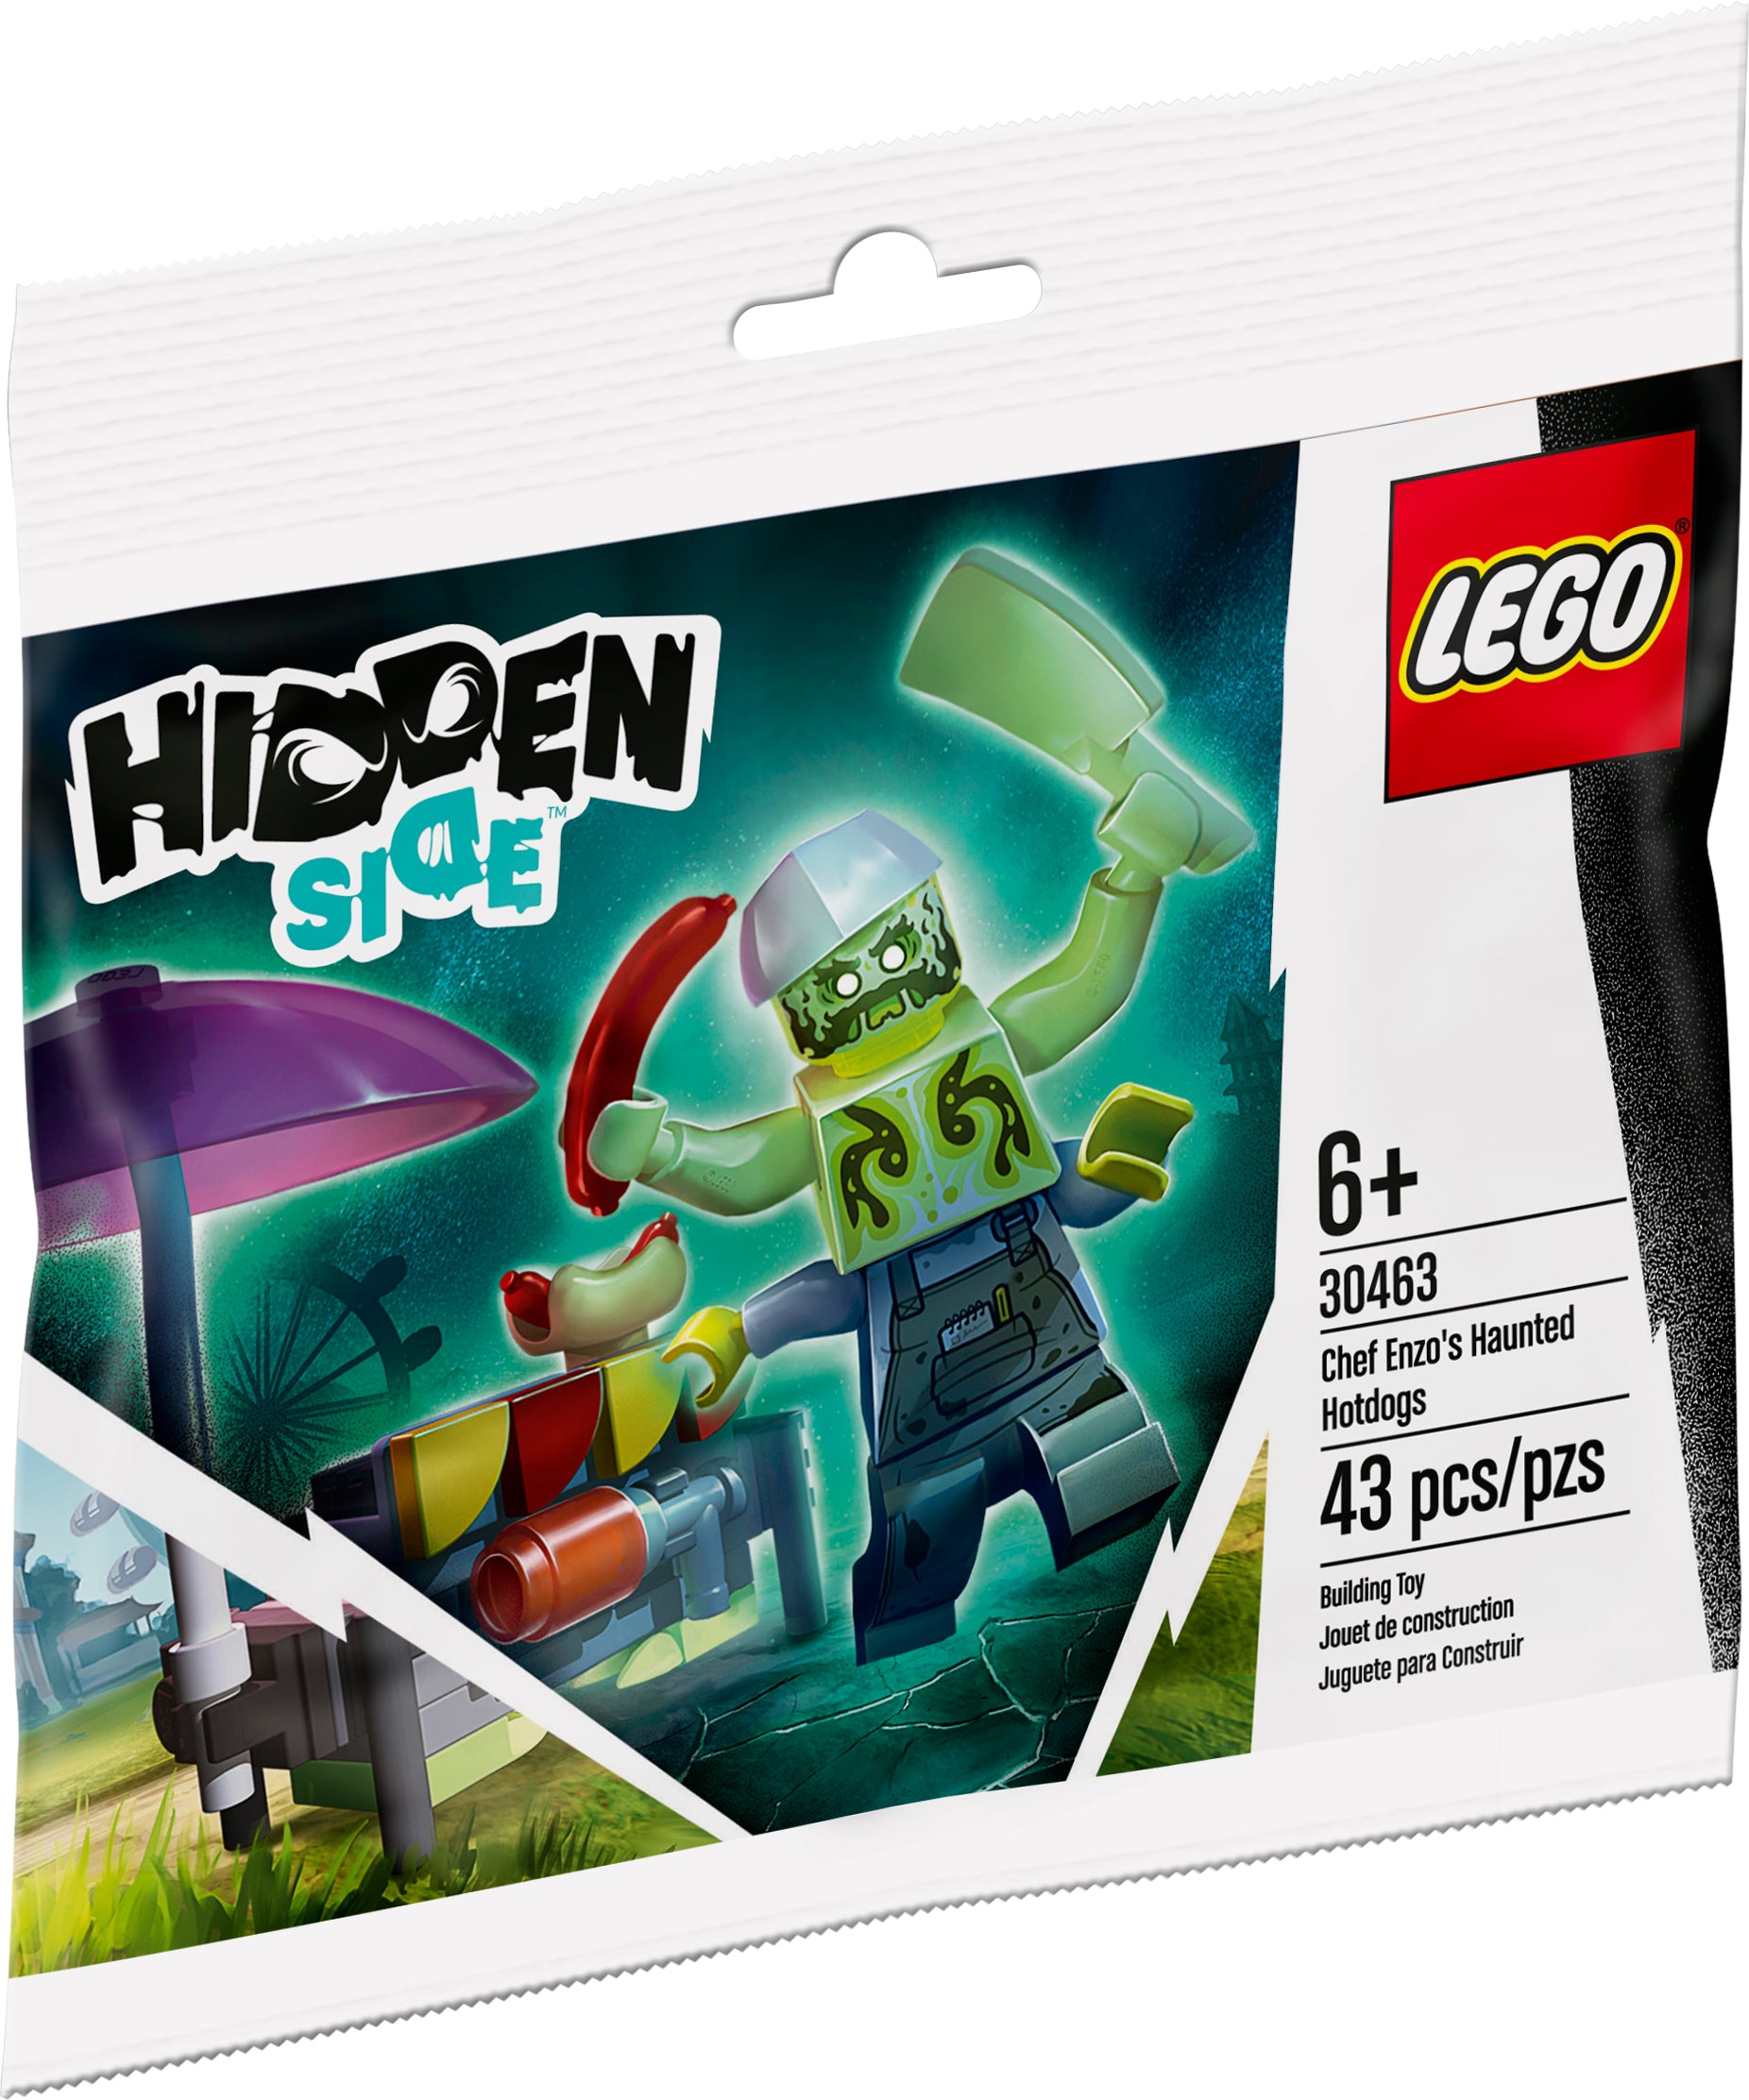 Chief Enzo's Haunted Hotdogs - LEGO Hidden Side Polybag Set (30463)